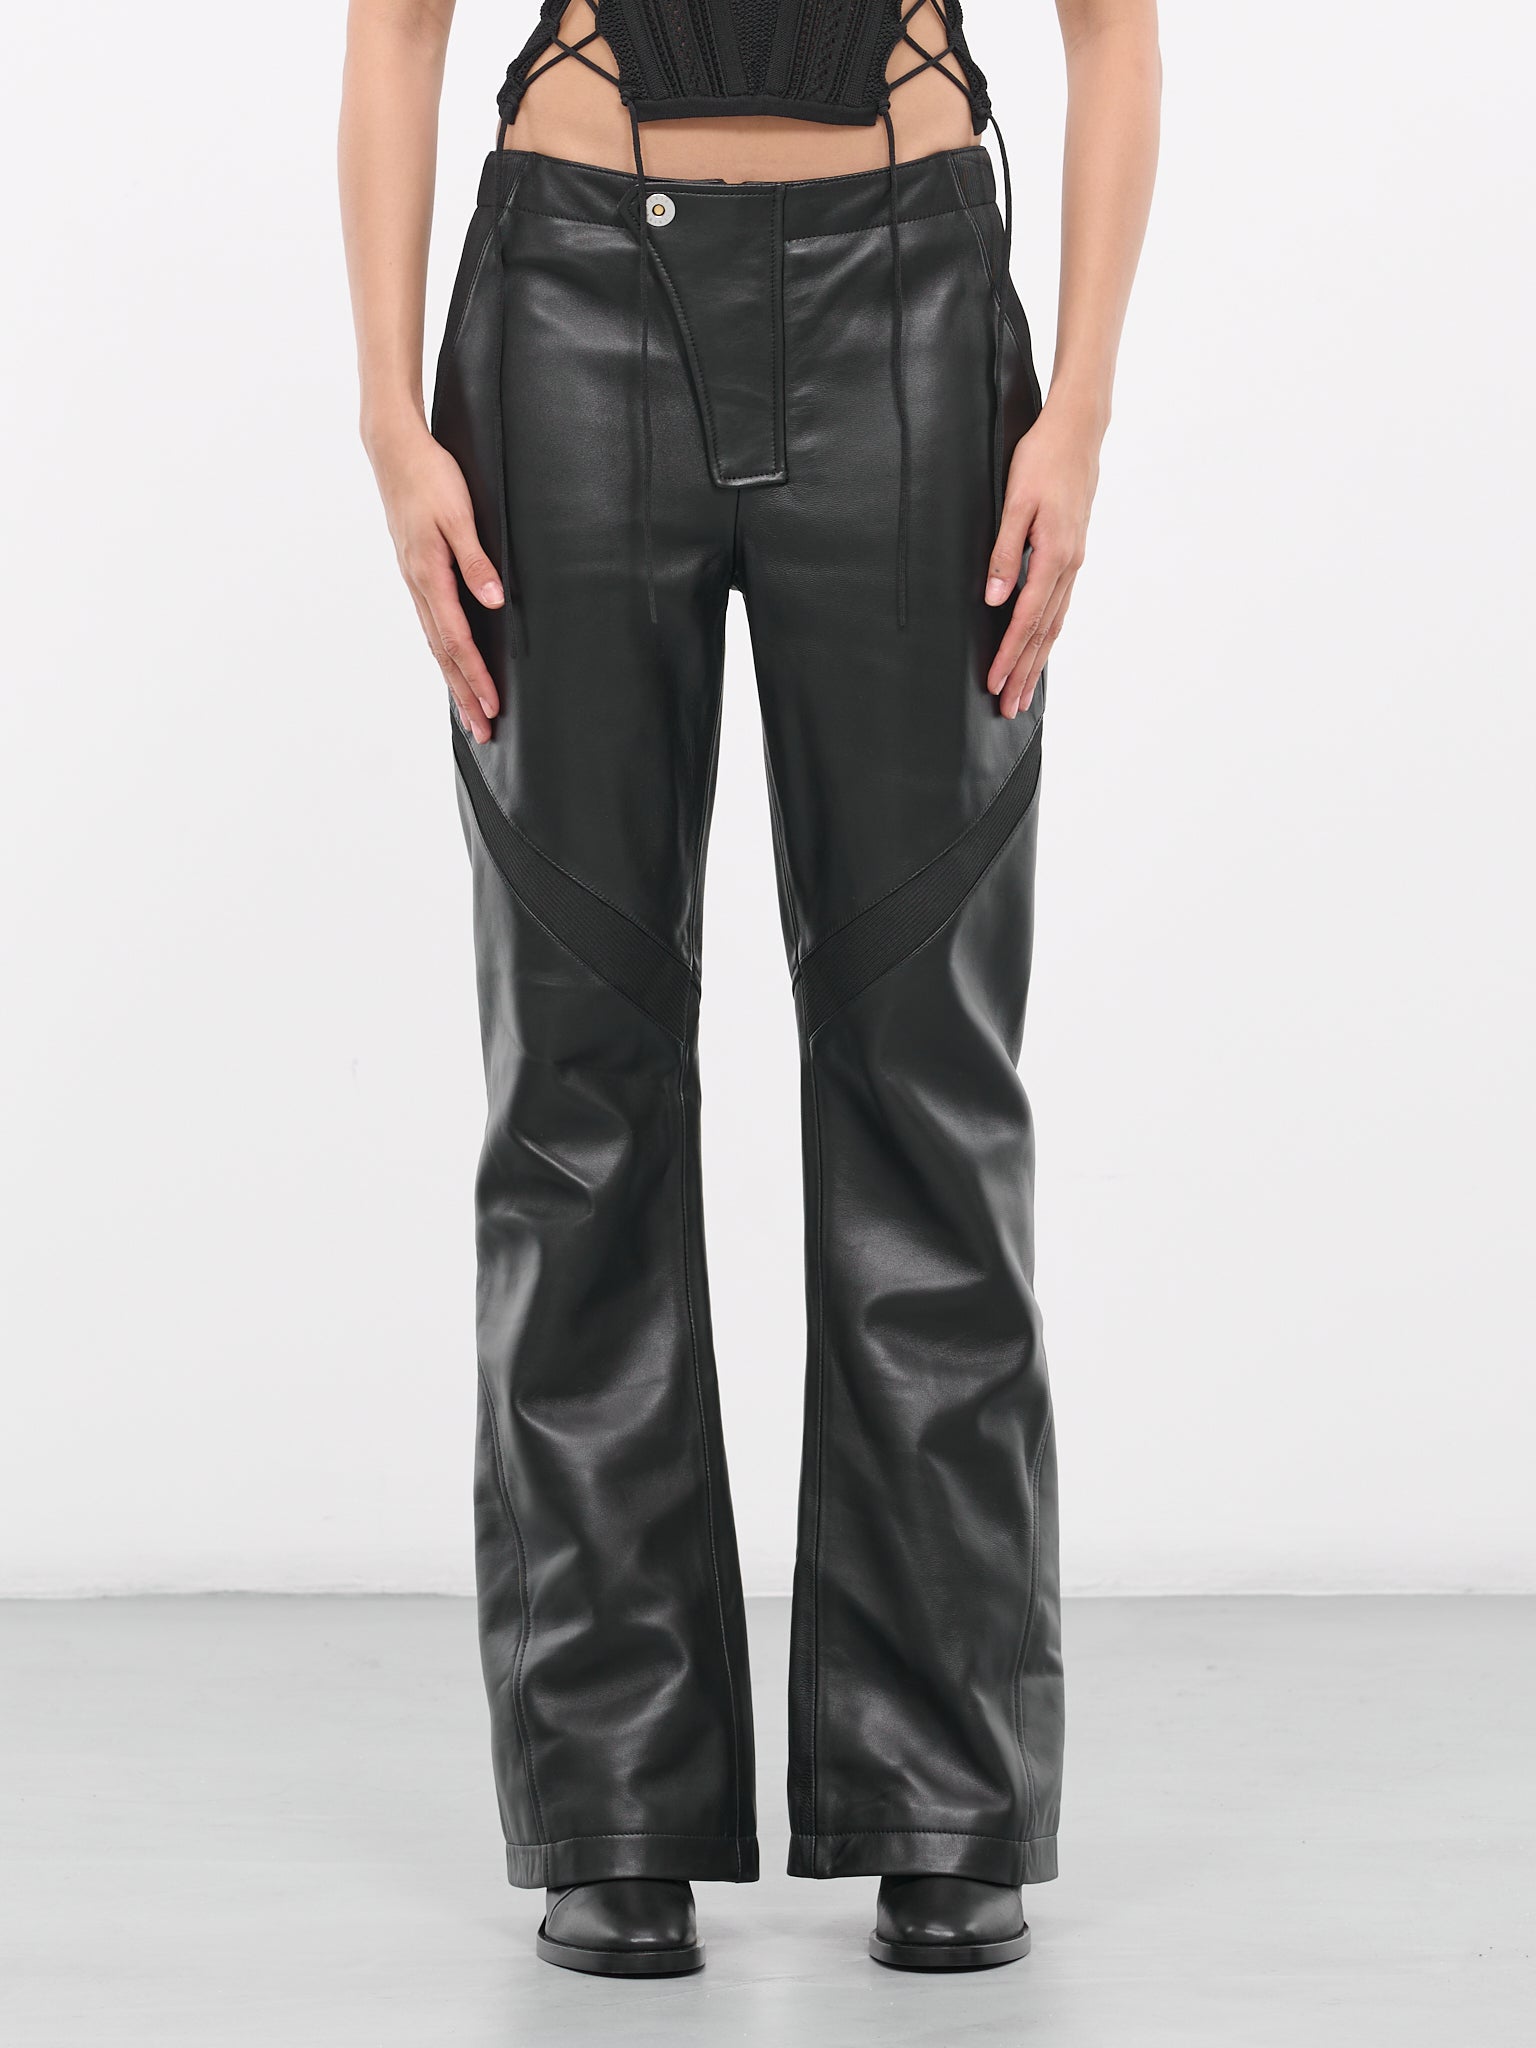 Leather Moto Pants (C2168-1000-BLACK)